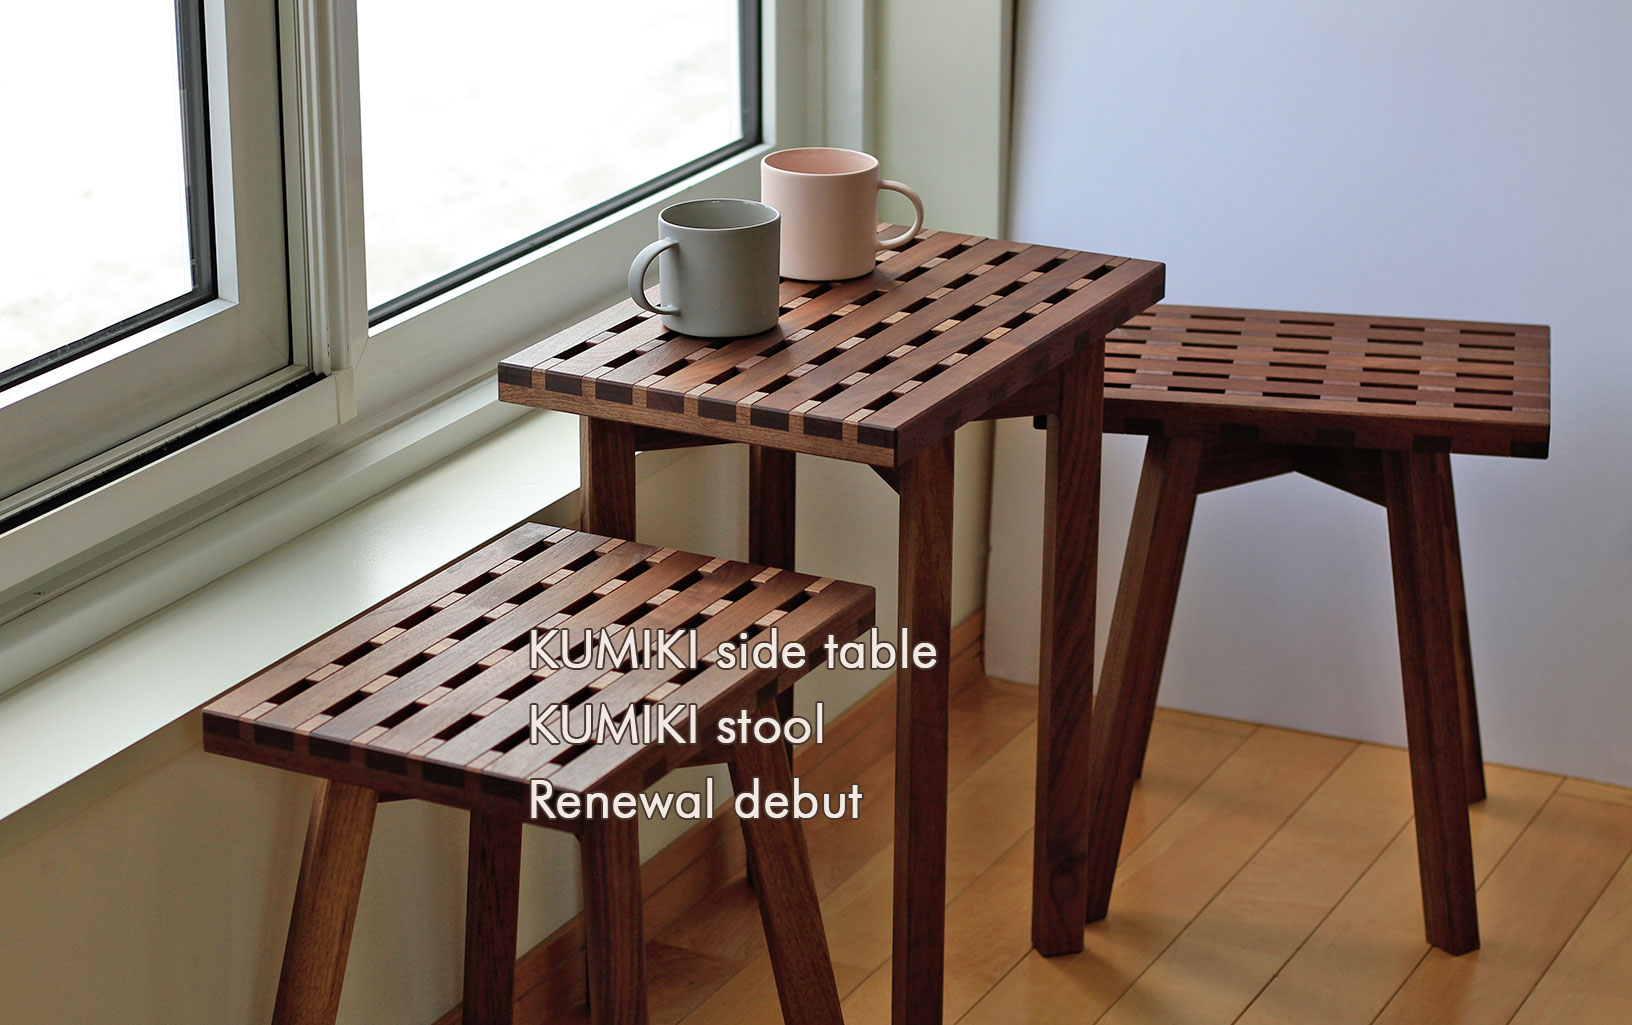 KUMIKIサイドテーブル・KUMIKIスツール